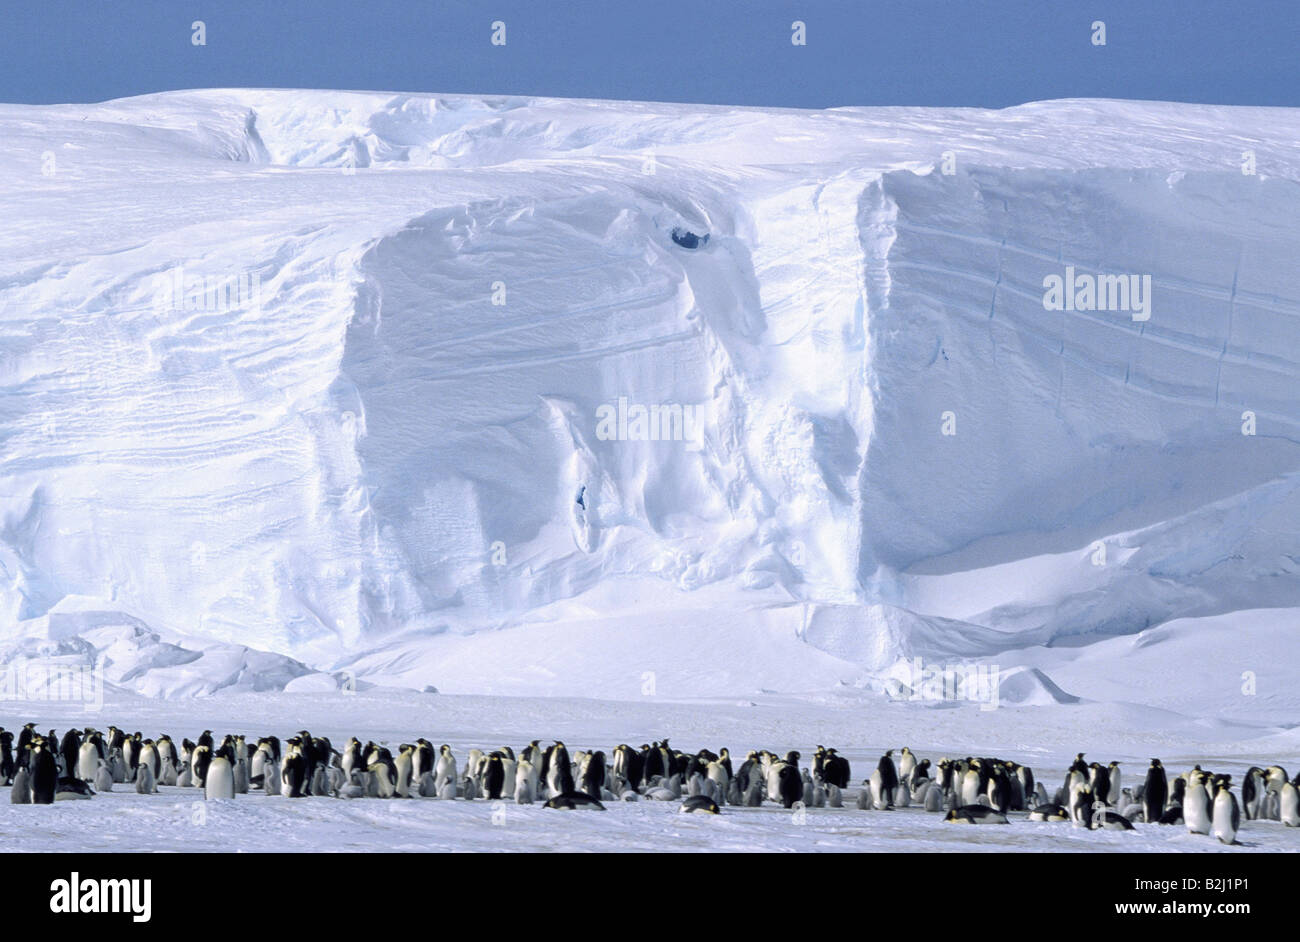 Почему в антарктиде холодно